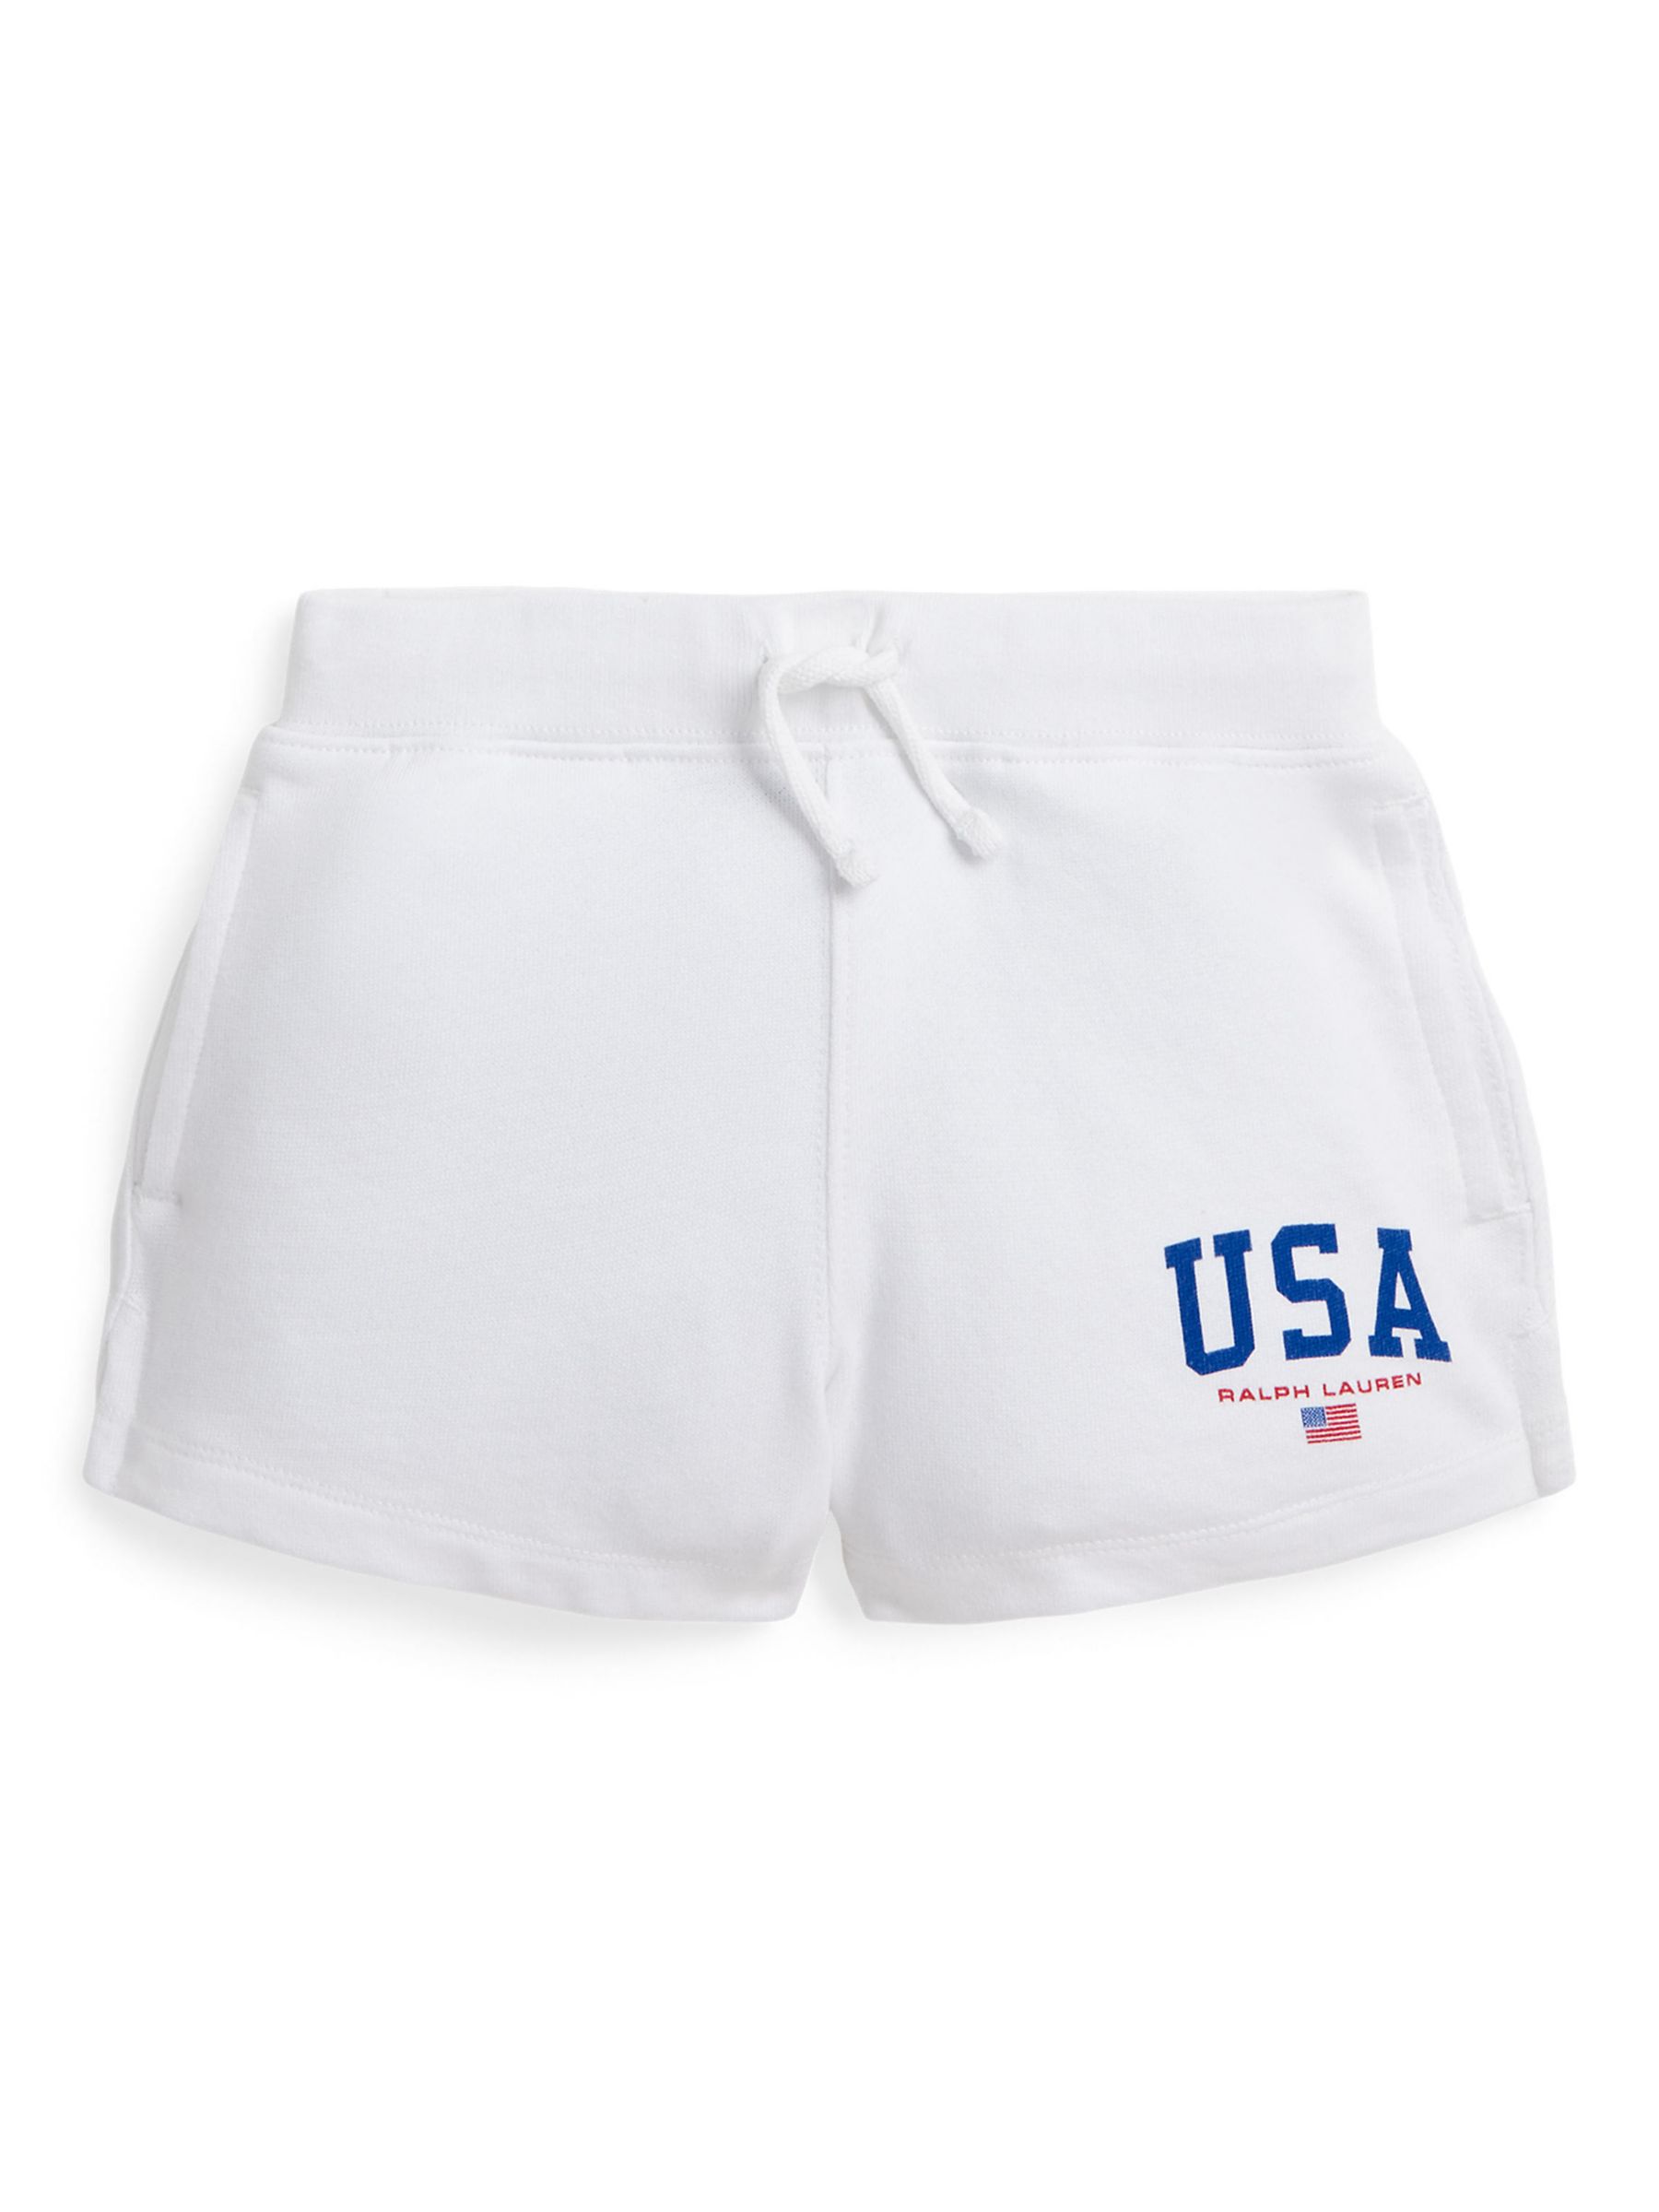 Ralph Lauren Kids' Logo USA  Athletic Shorts, White, 2 years